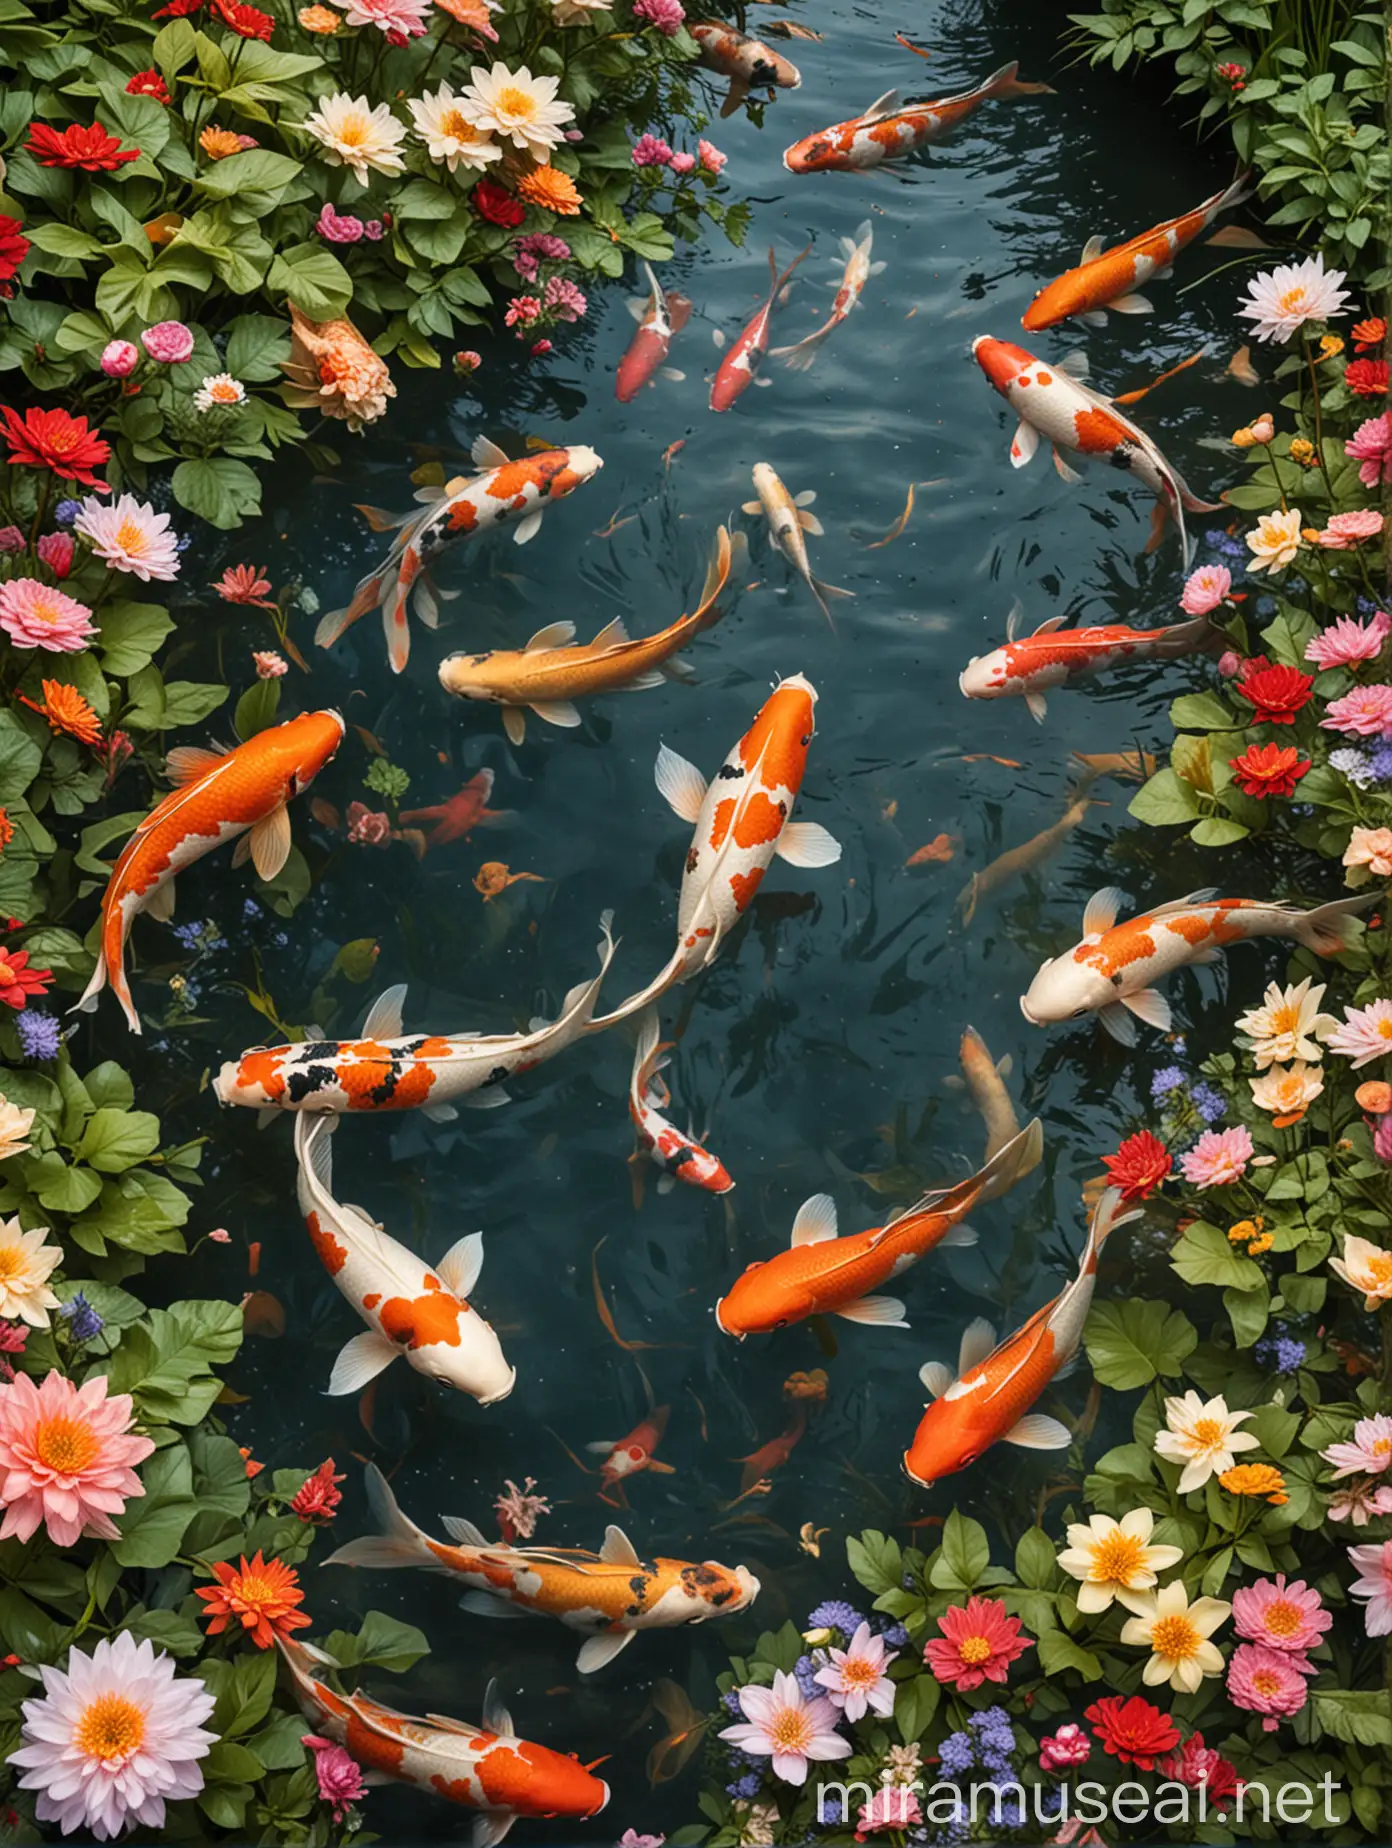 Koi Fish Swimming Among Vibrant Flowers